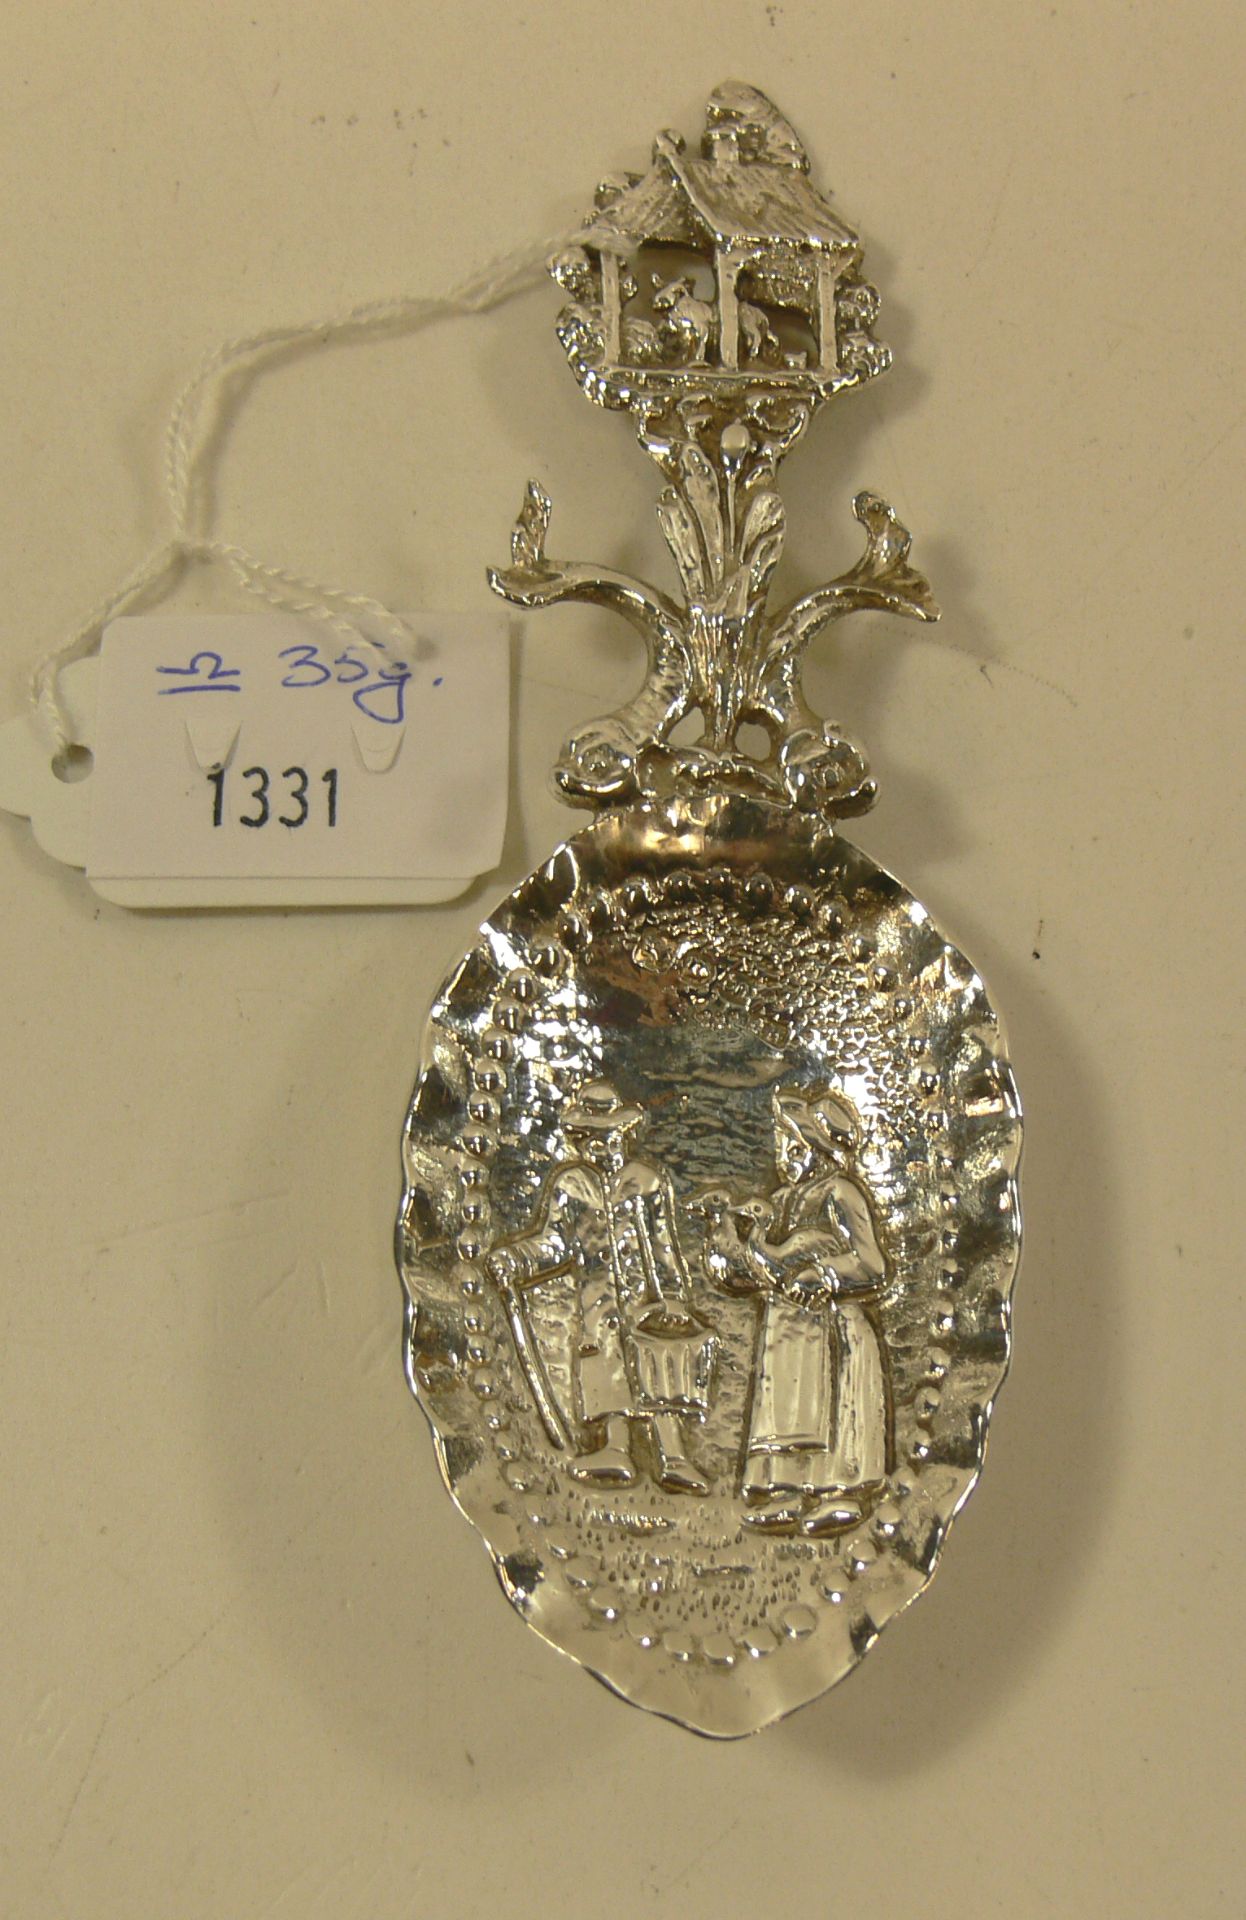 A hallmarked silver spoon (approx 35g) (est £20-£40)